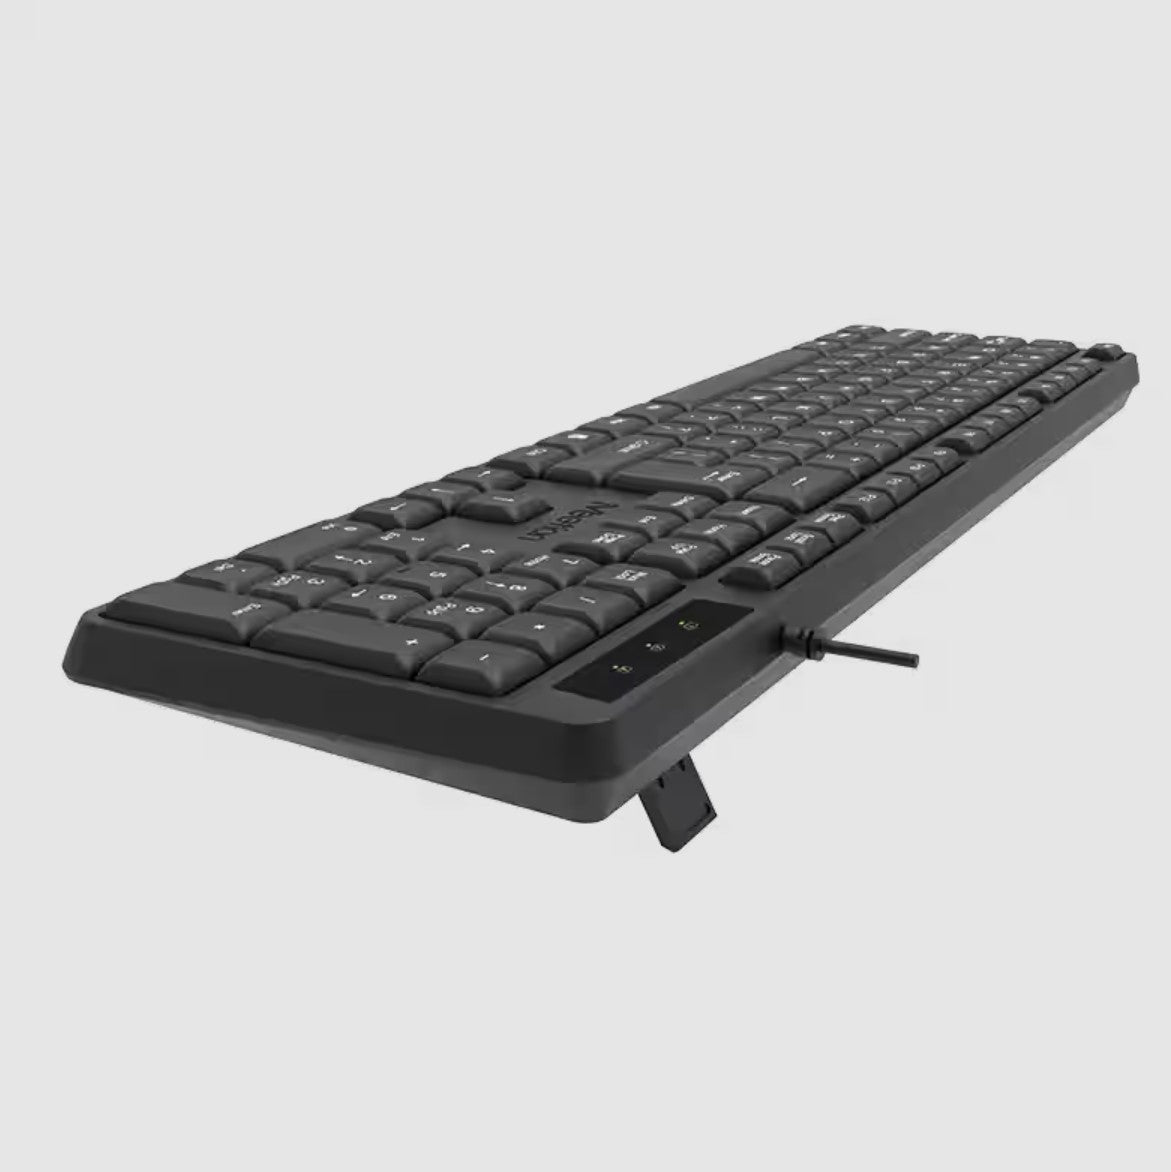 Meetion MT-K200 Standard USB Chocolate Keyboard